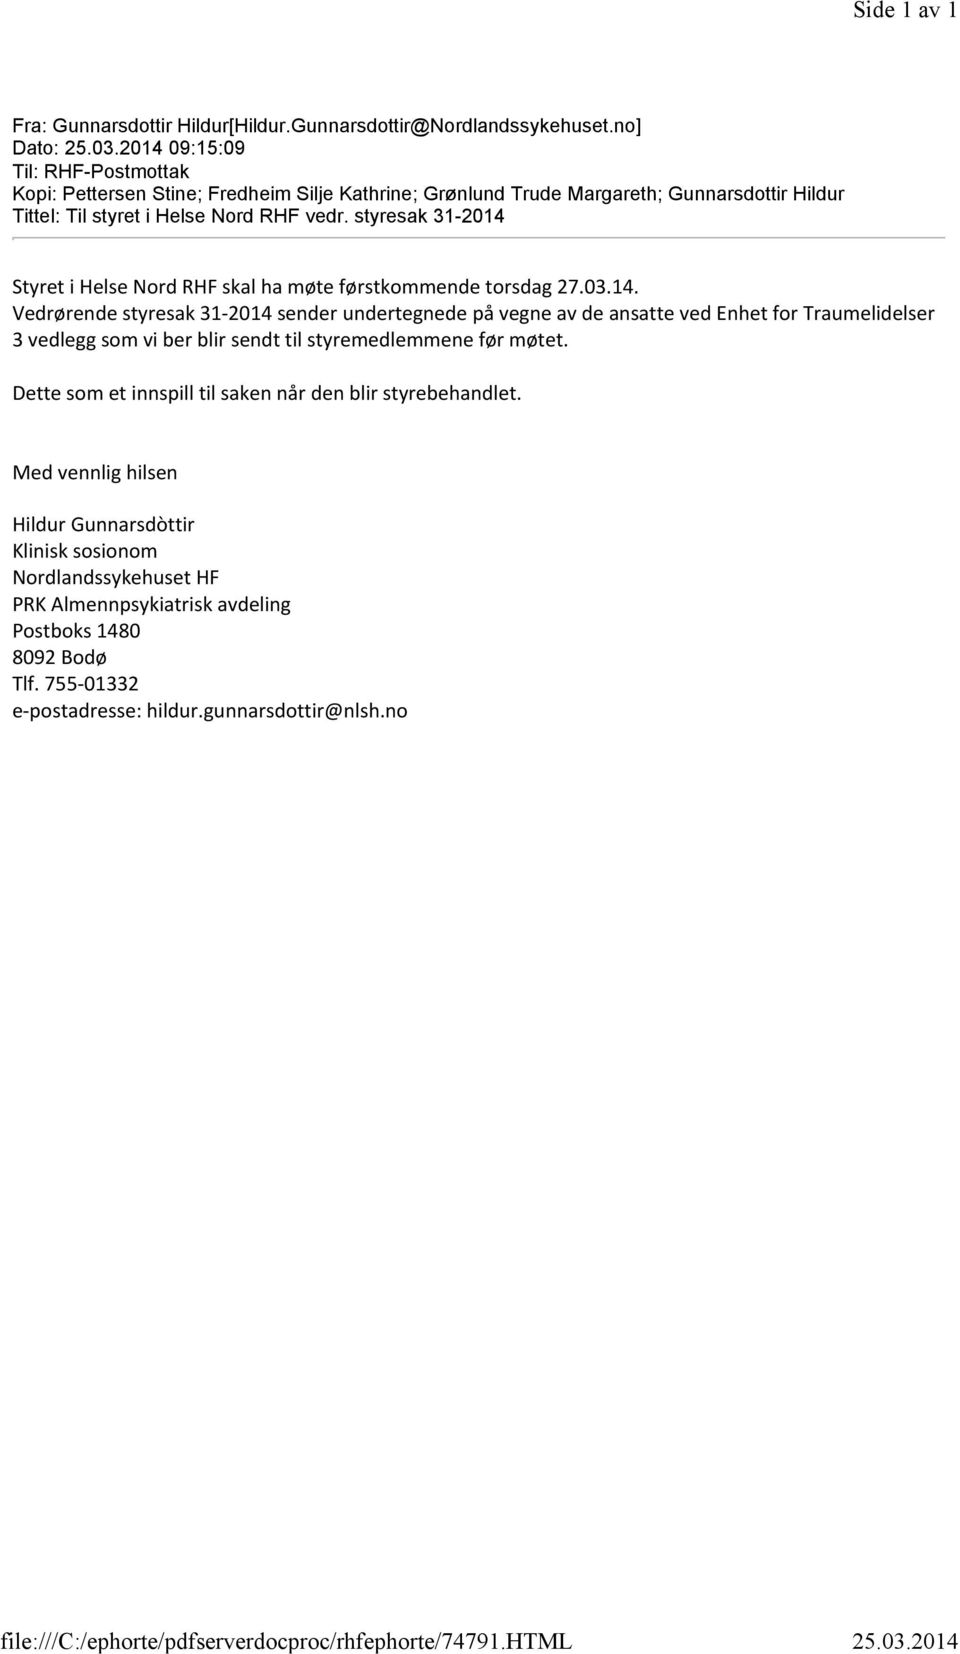 2014 09:15:09 Til: RHF-Postmottak Kopi: Pettersen Stine; Fredheim Silje Kathrine; Grønlund Trude Margareth; Gunnarsdottir Hildur Tittel: Til styret i Helse Nord RHF vedr.